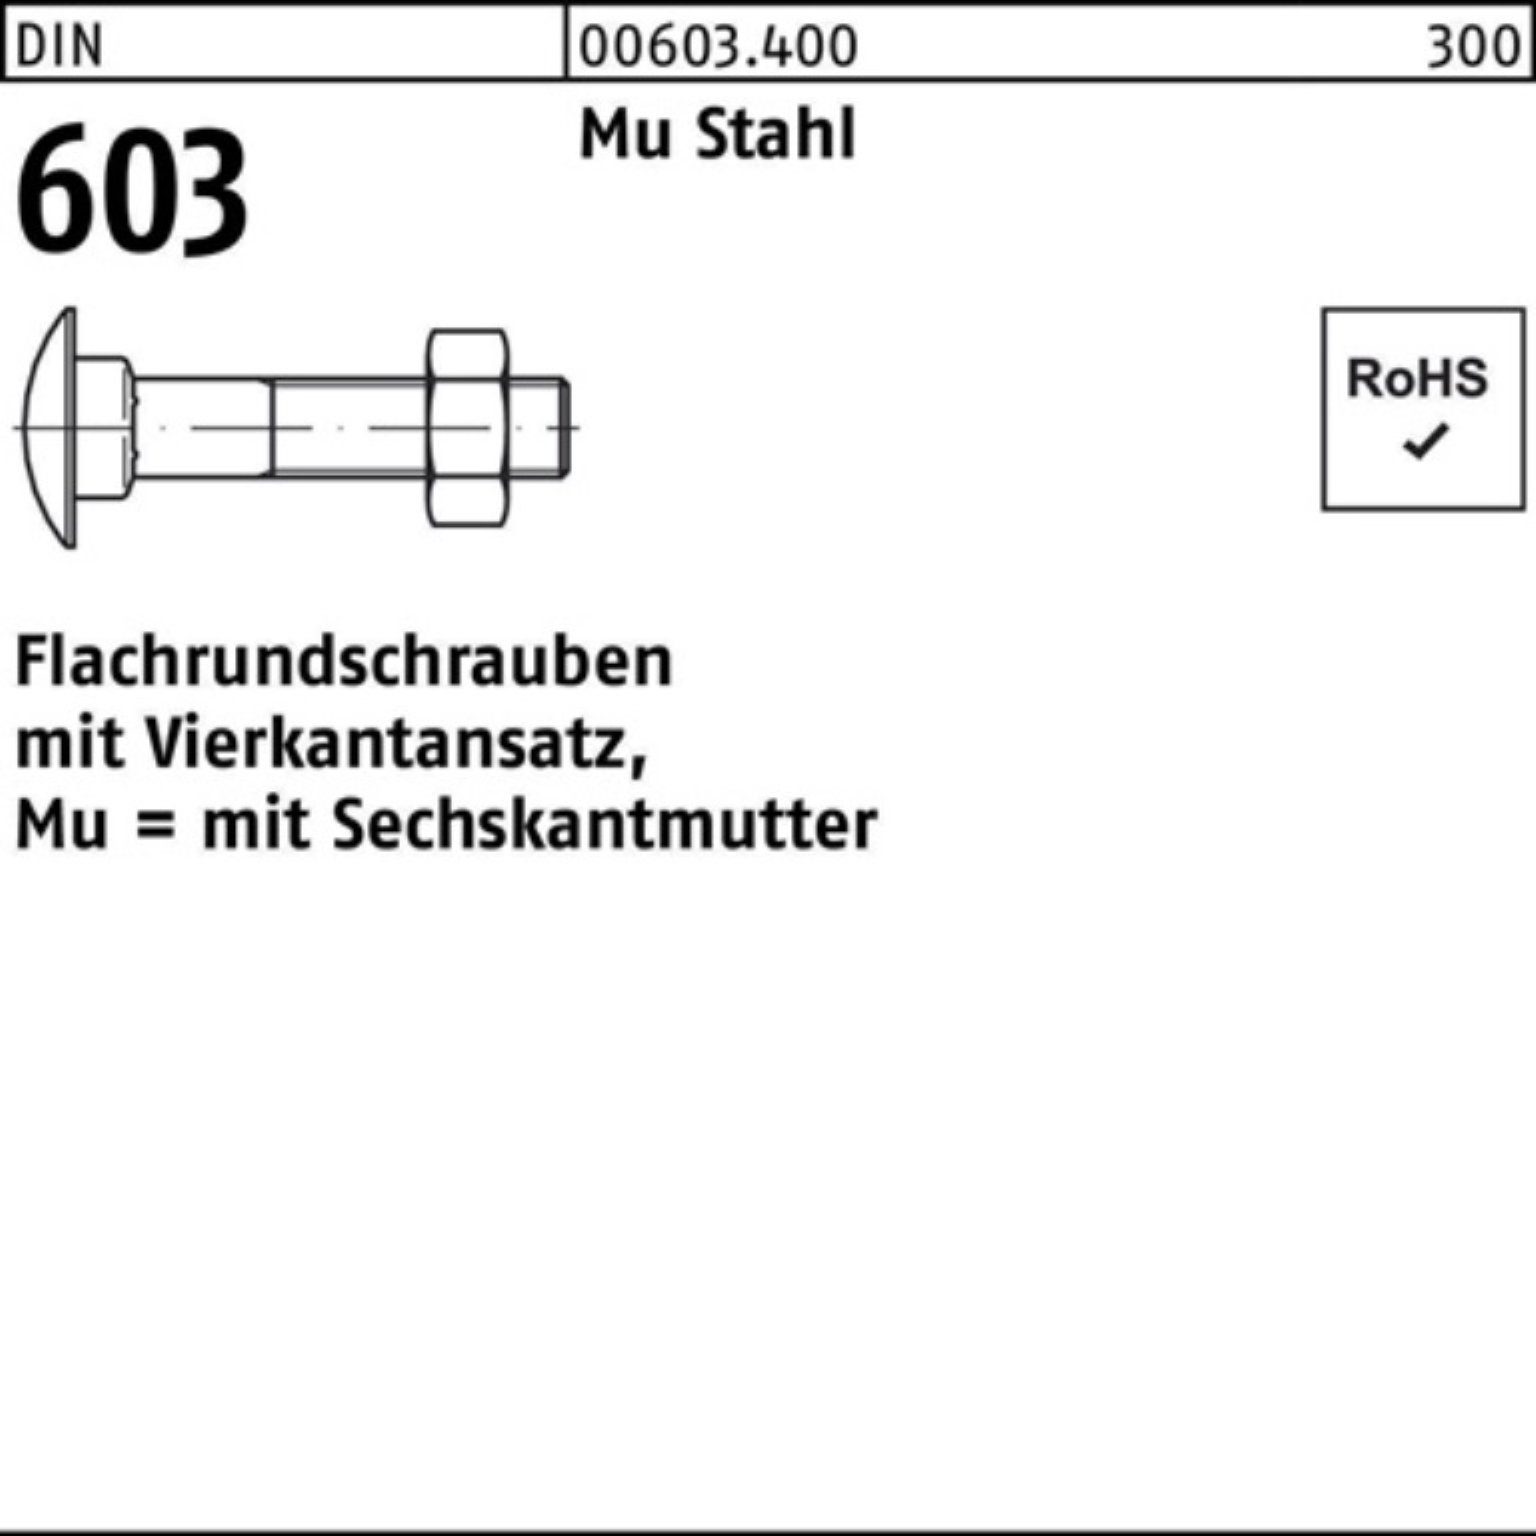 Reyher Schraube M6x50 DIN M Vierkantansatz/6-ktmutter 200er Pack 603 Flachrundschraube